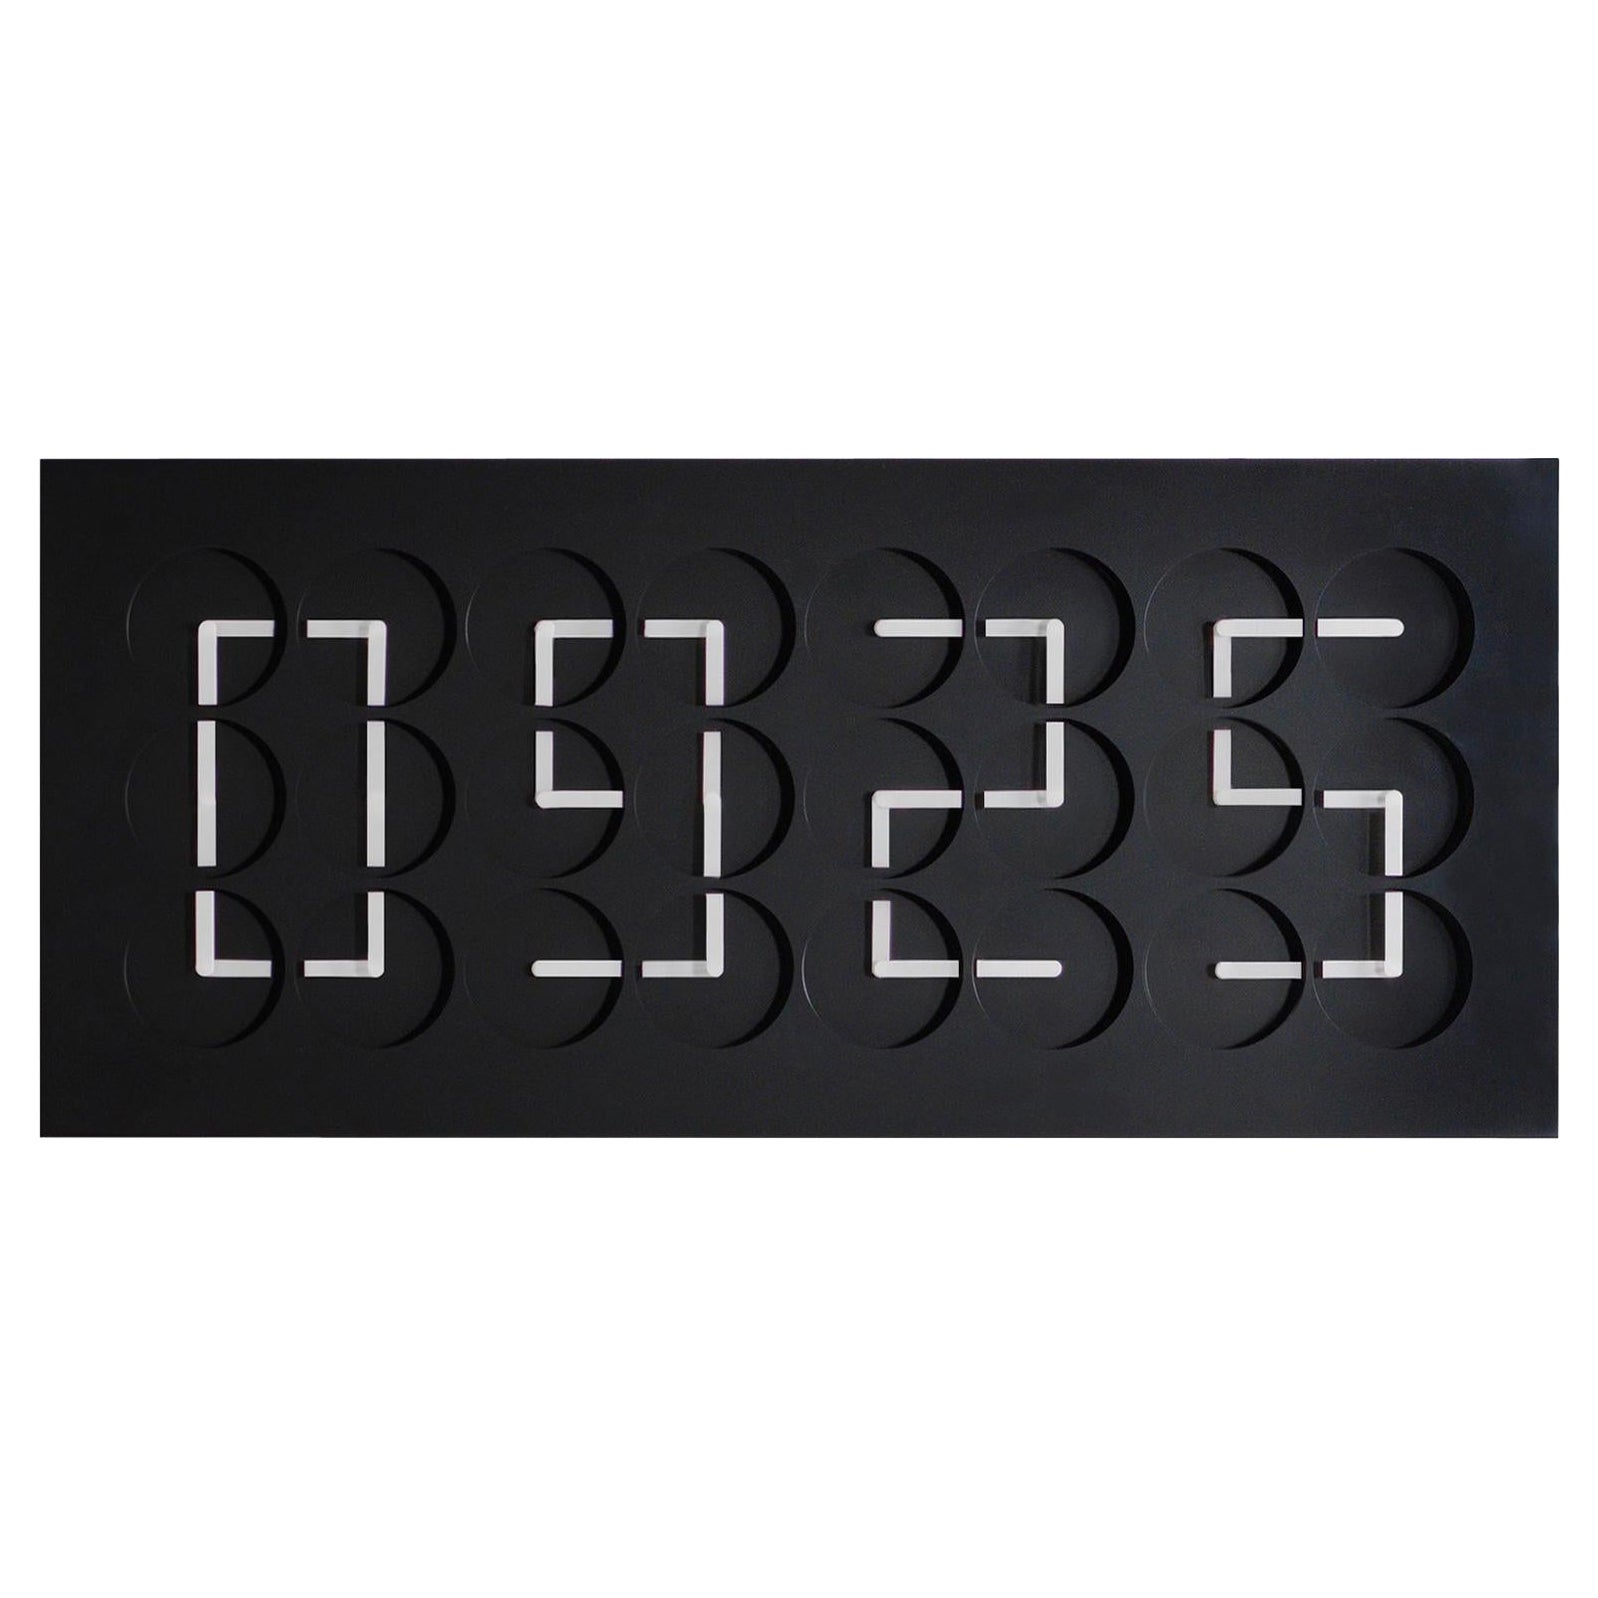 ClockClock 24 Black by Humans since 1982, Kinetic Sculpture, Wall Clock